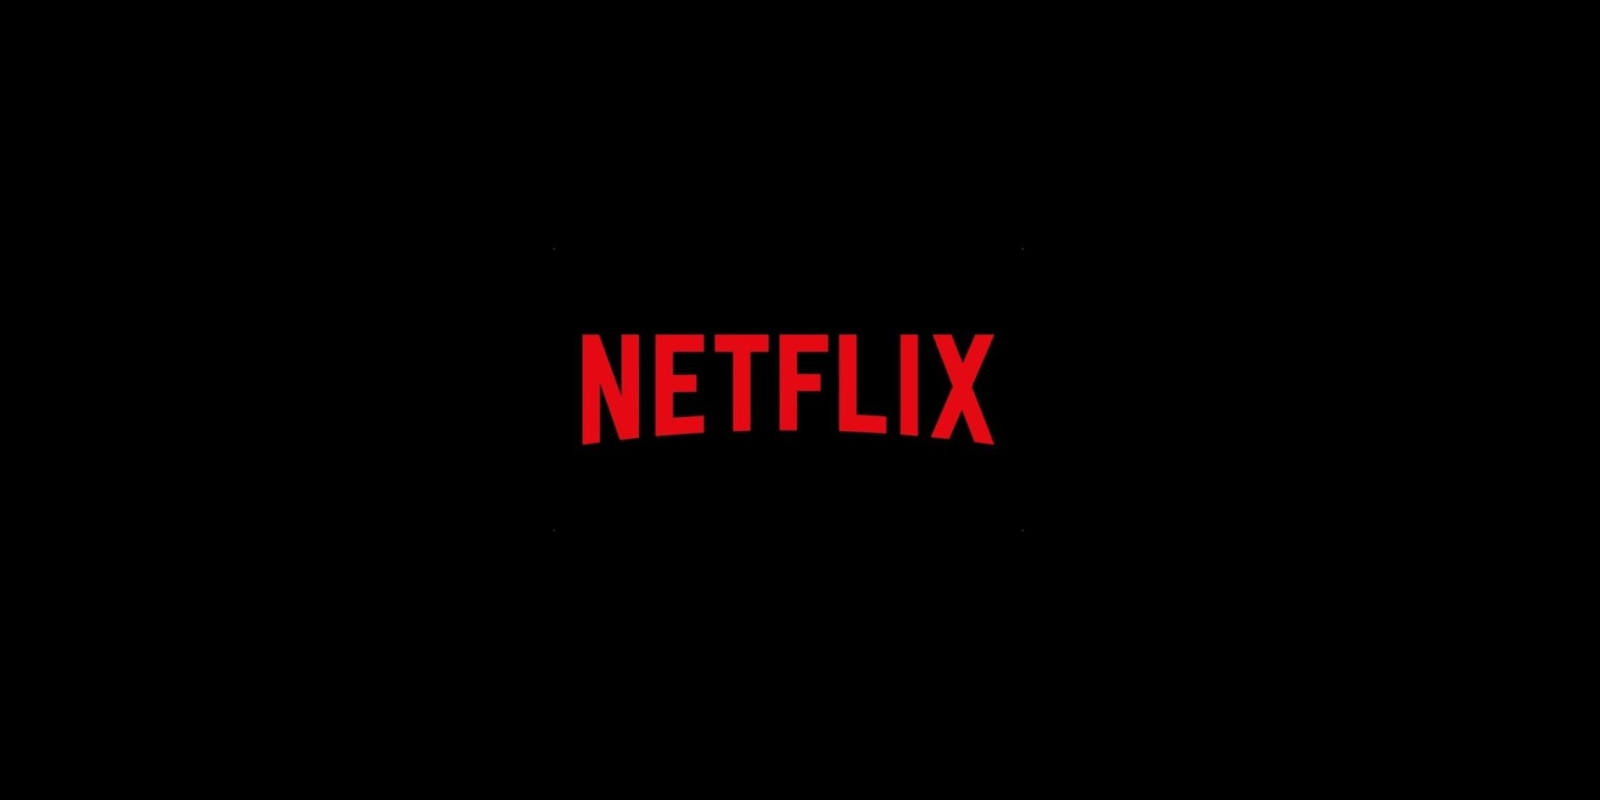 Netflix rozstrzygnął przetarg MSL MEDIARUN COM NETFLIX PRZETARG V1